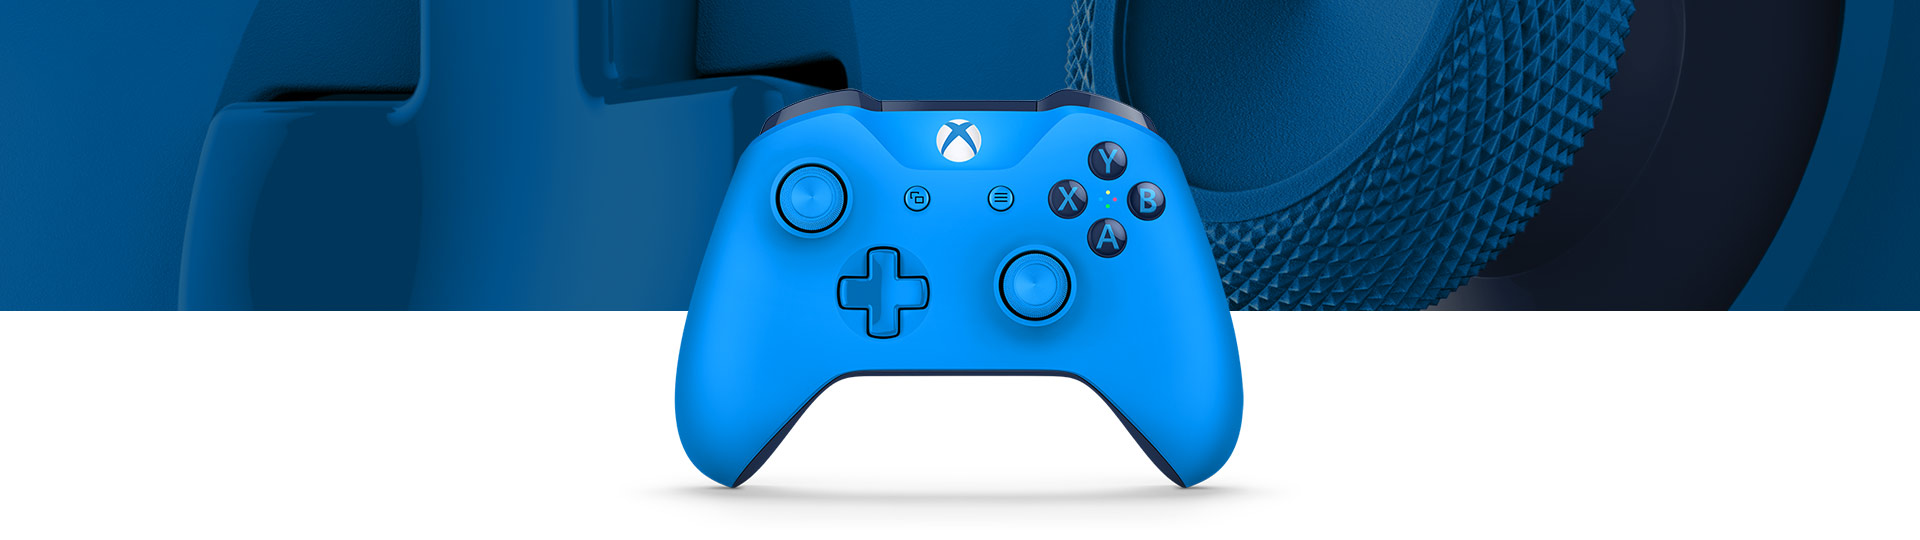 Microsoft Xbox Wireless Controller синий. Wireless Controller CUH-zct2e с принтом. Xbox one Gamepad Shock Blue. Стики Xbox синие. Blue control